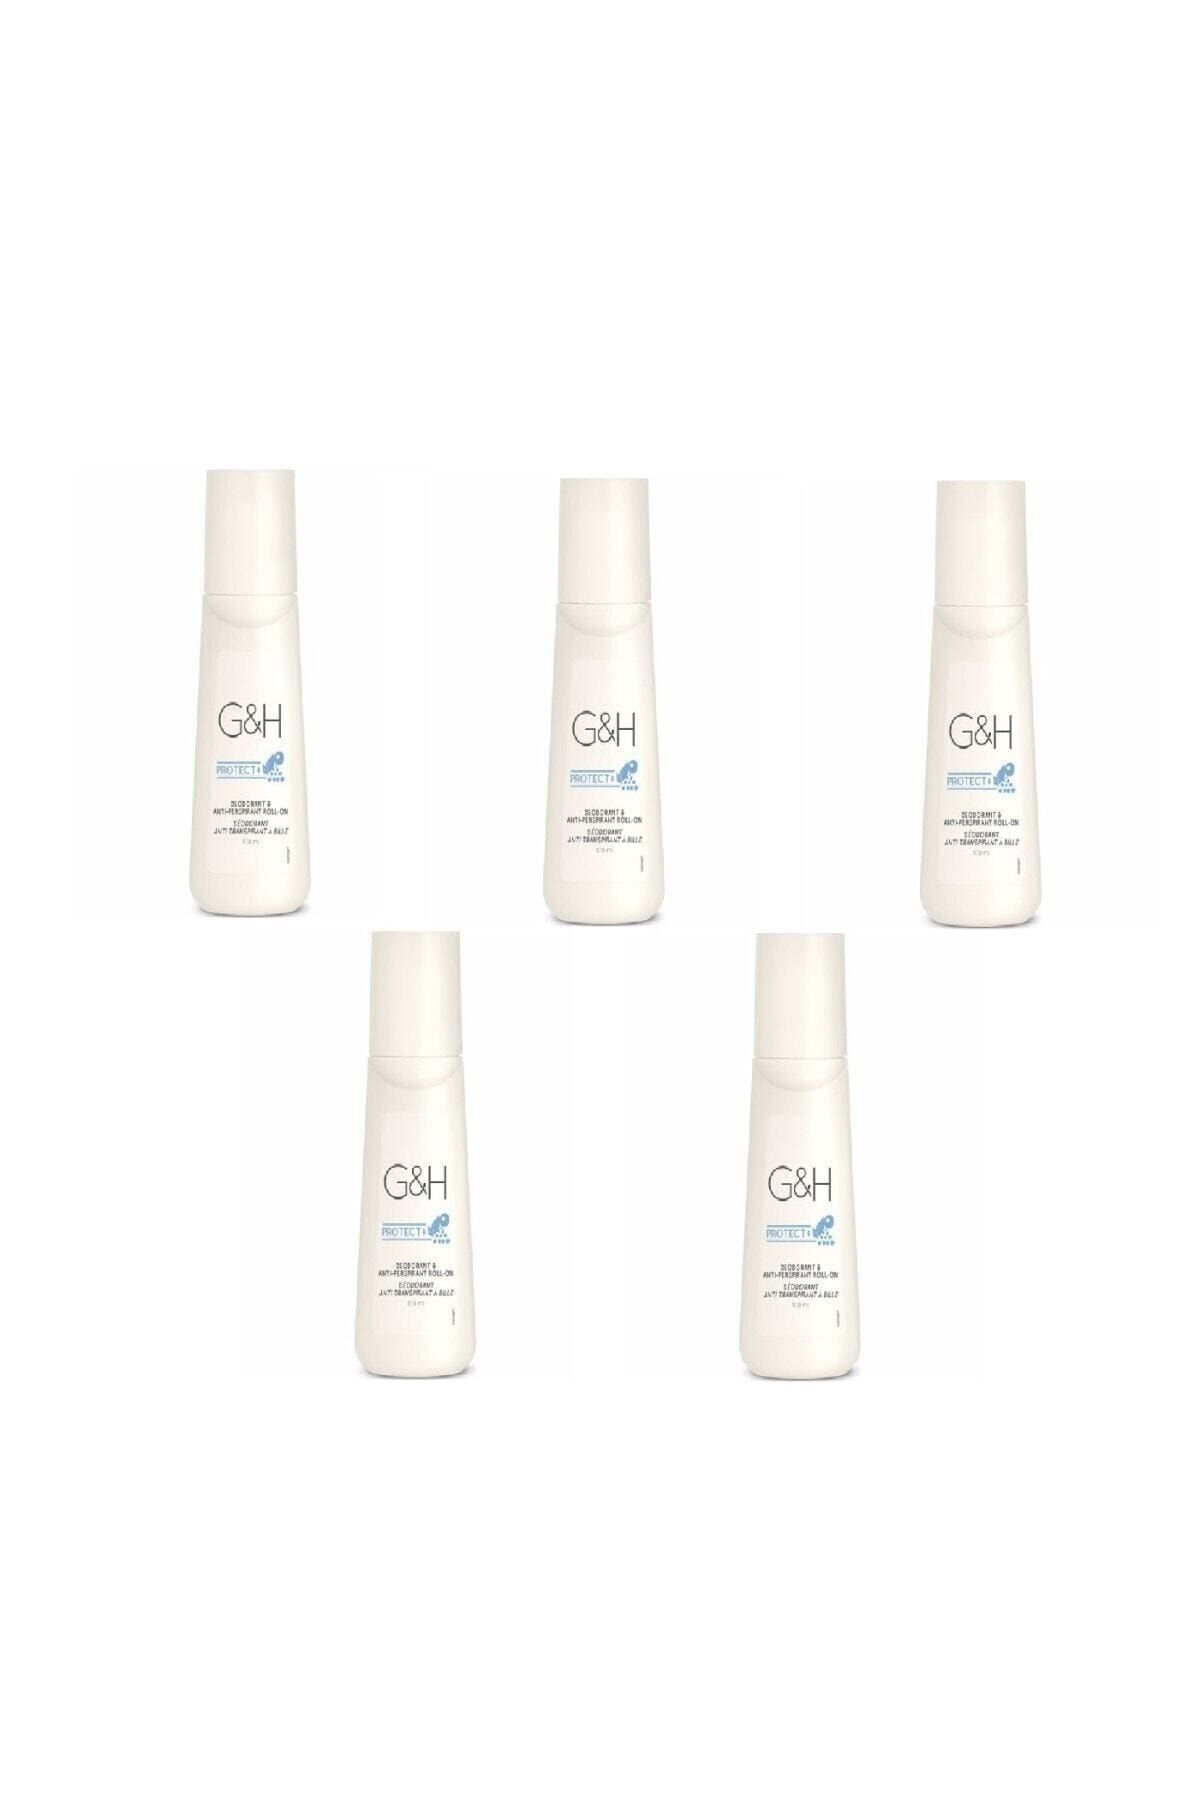 Amway G&h Protect+ Terlemeye Karşı/koku Giderici Roll-on Deodorant (5'li)